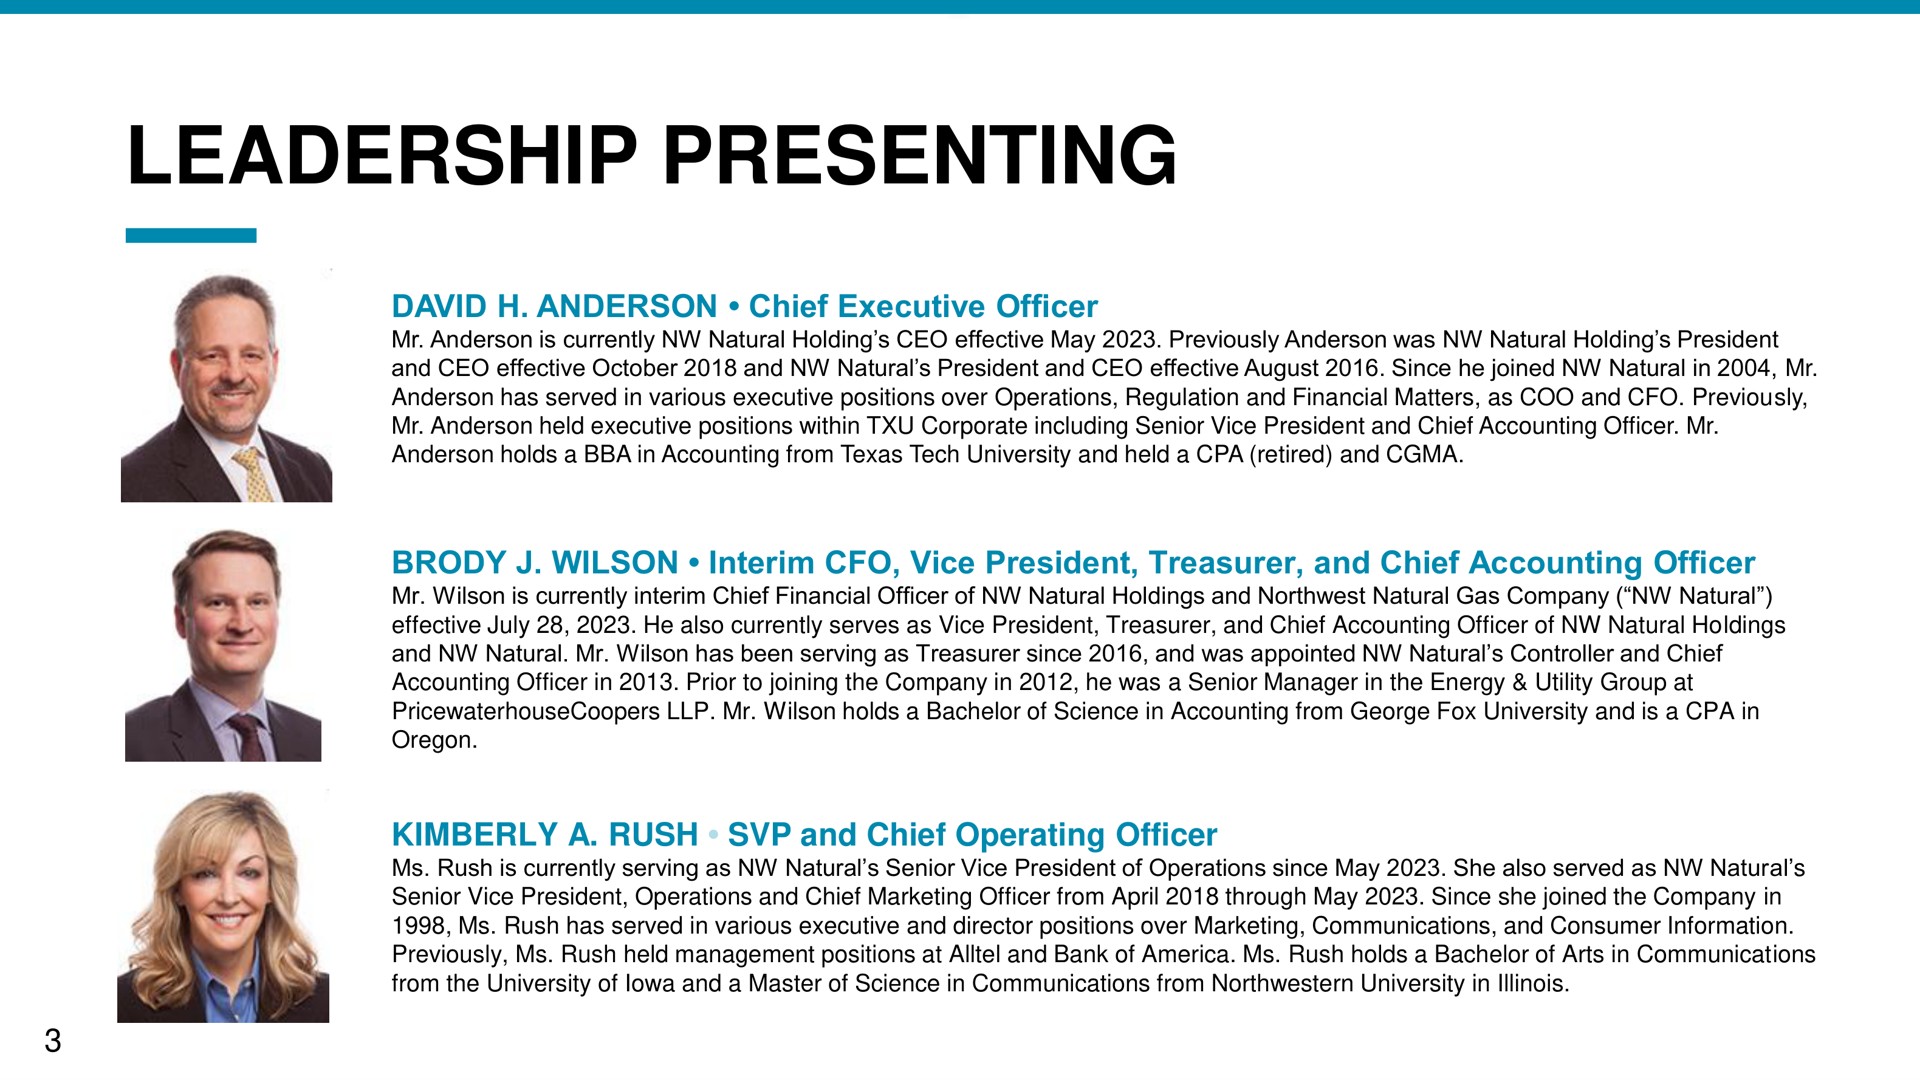 leadership presenting | NW Natural Holdings